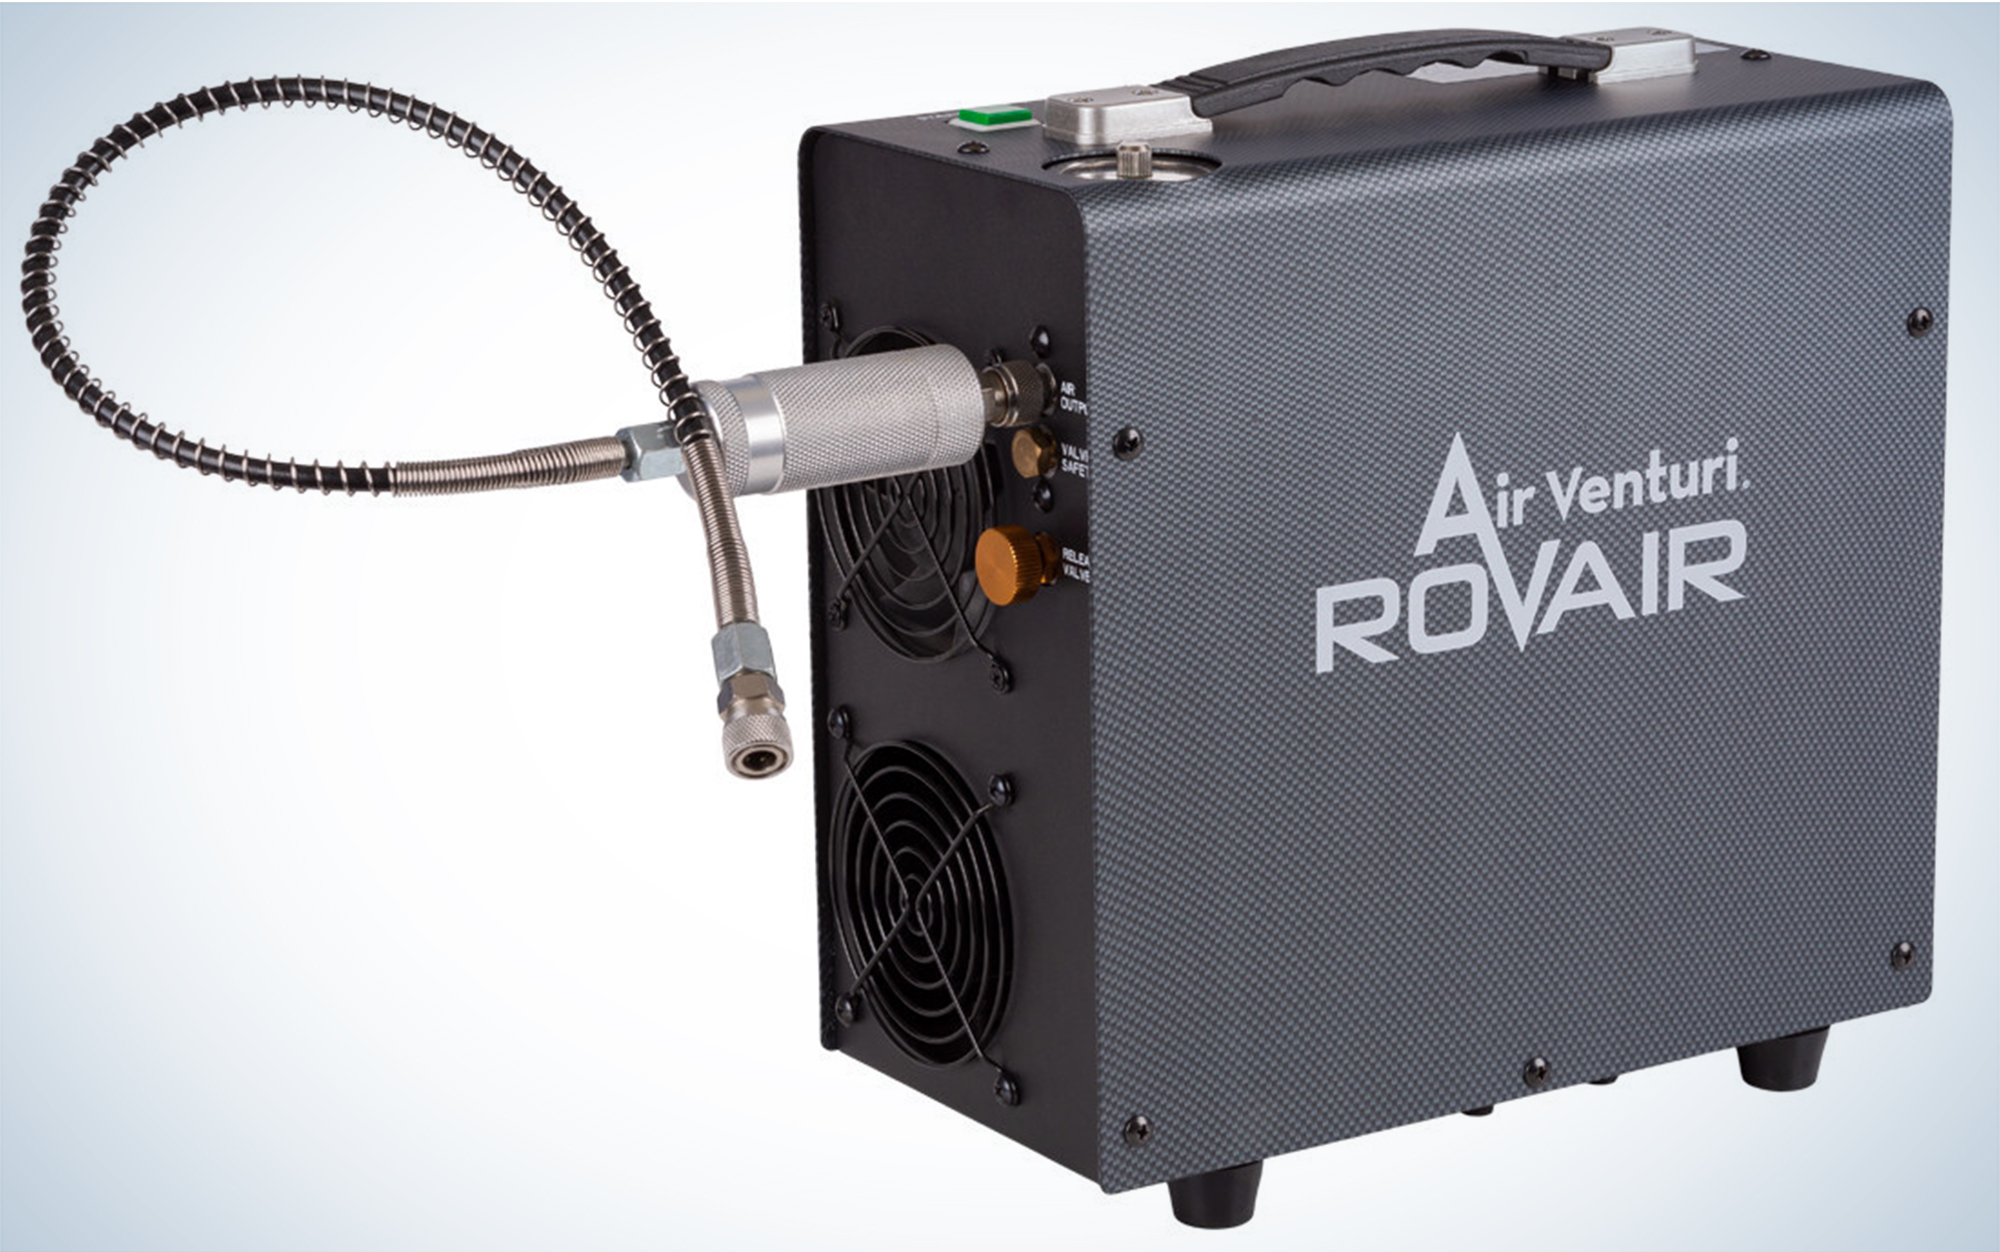 We tested the AirVenturi ROVAIR 4500 Portable Compressor.